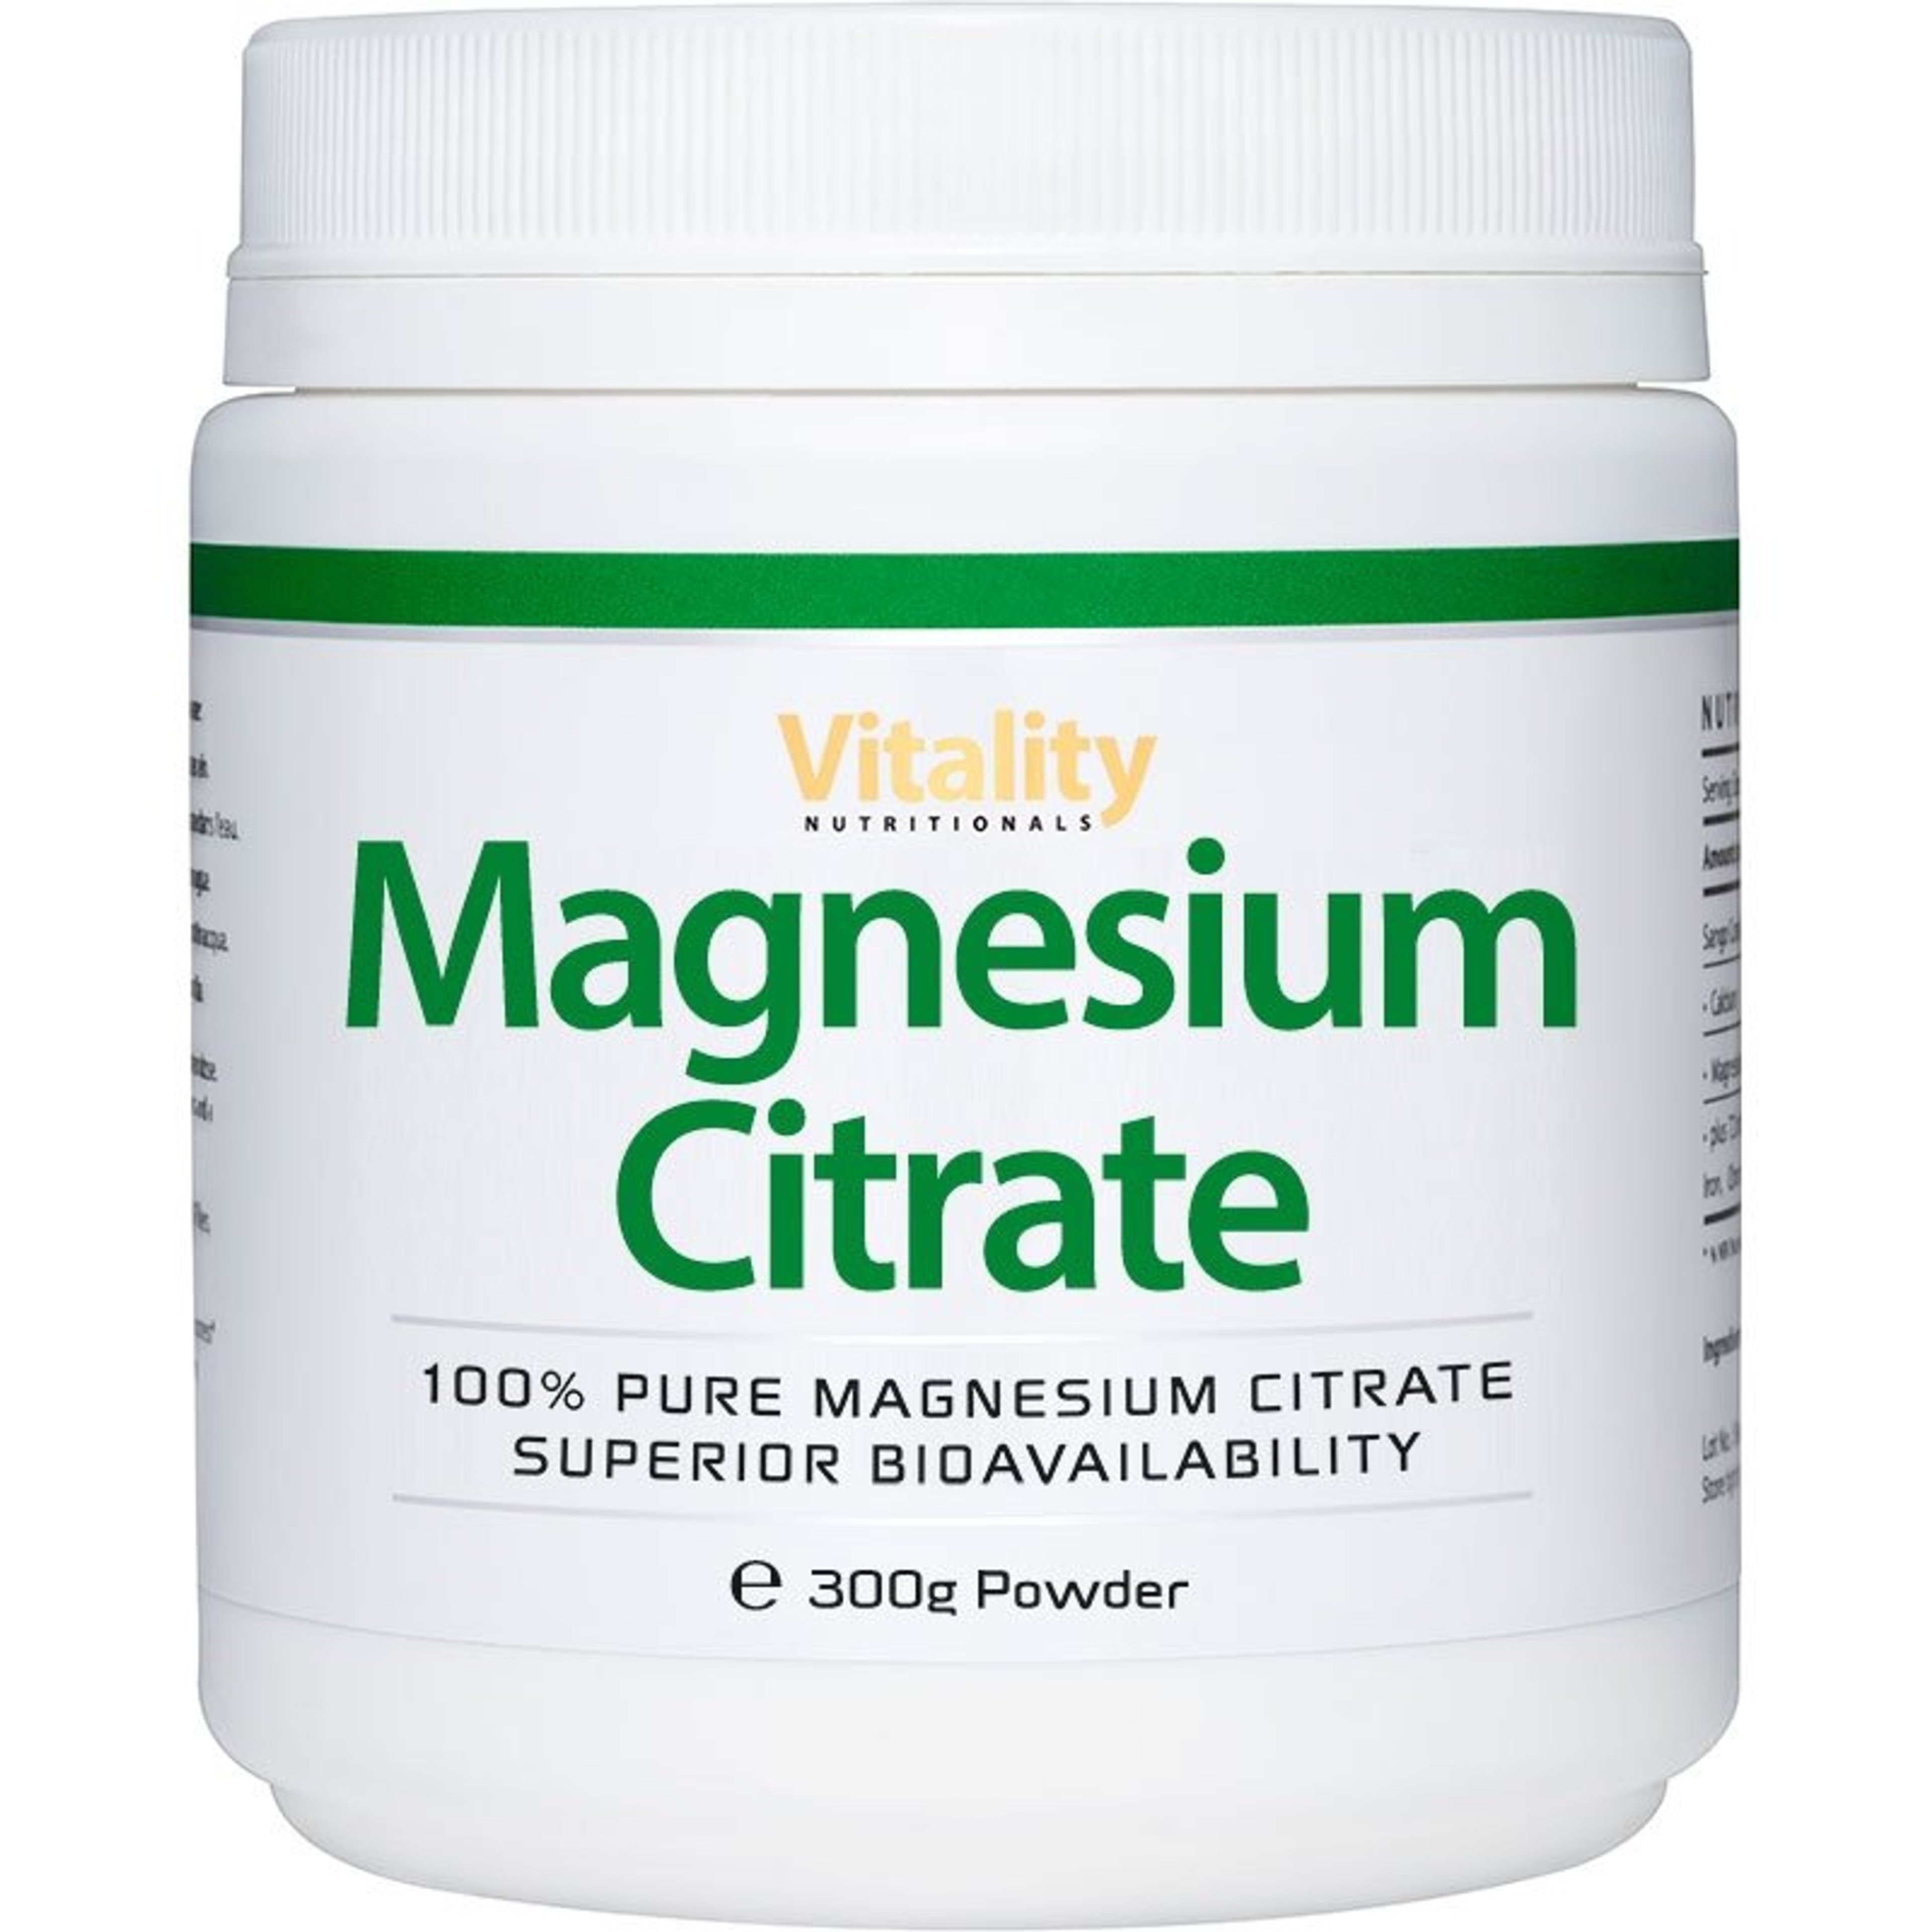 Magnesium Citrate Powder - 300 g Powder